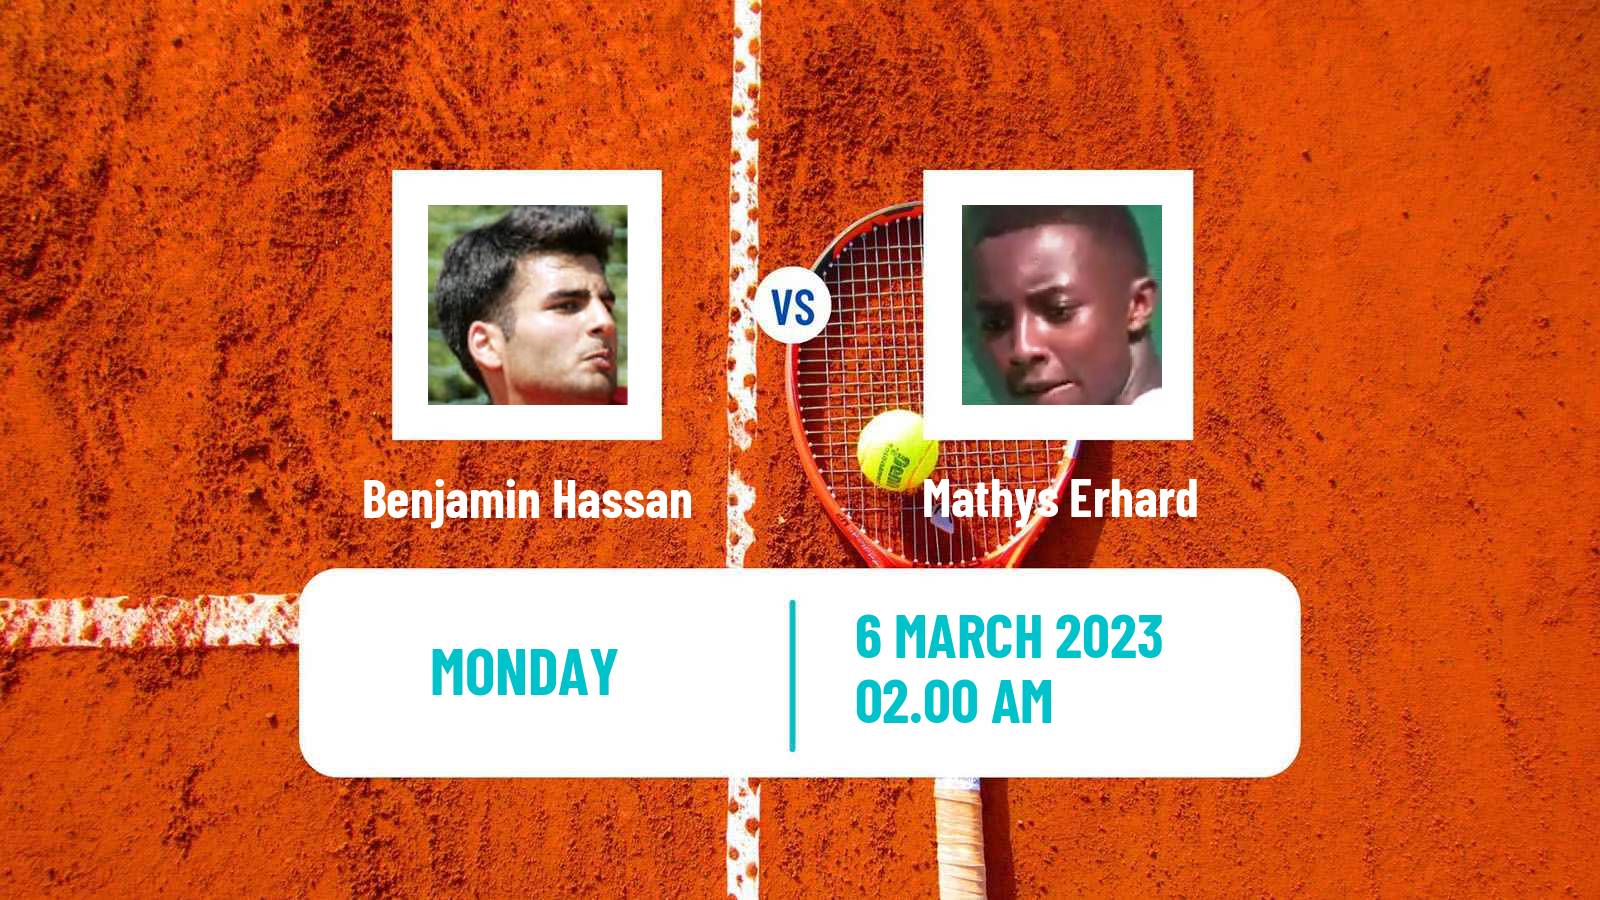 Tennis ATP Challenger Benjamin Hassan - Mathys Erhard